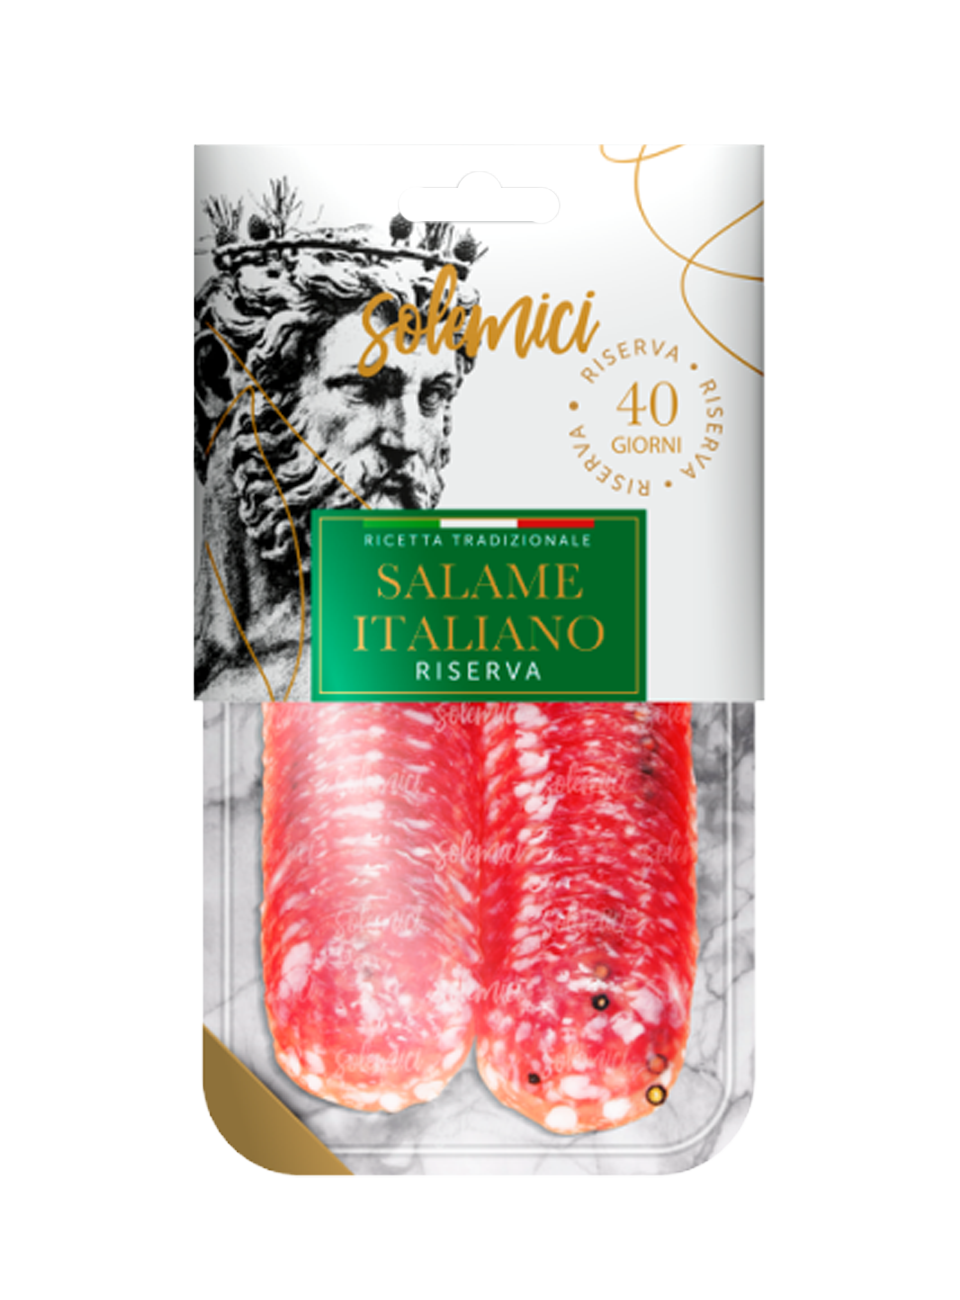 Колбаса Salame «Italiano» (Салями «Итальяно») упак. МГС, сервировочная нарезка 70 г